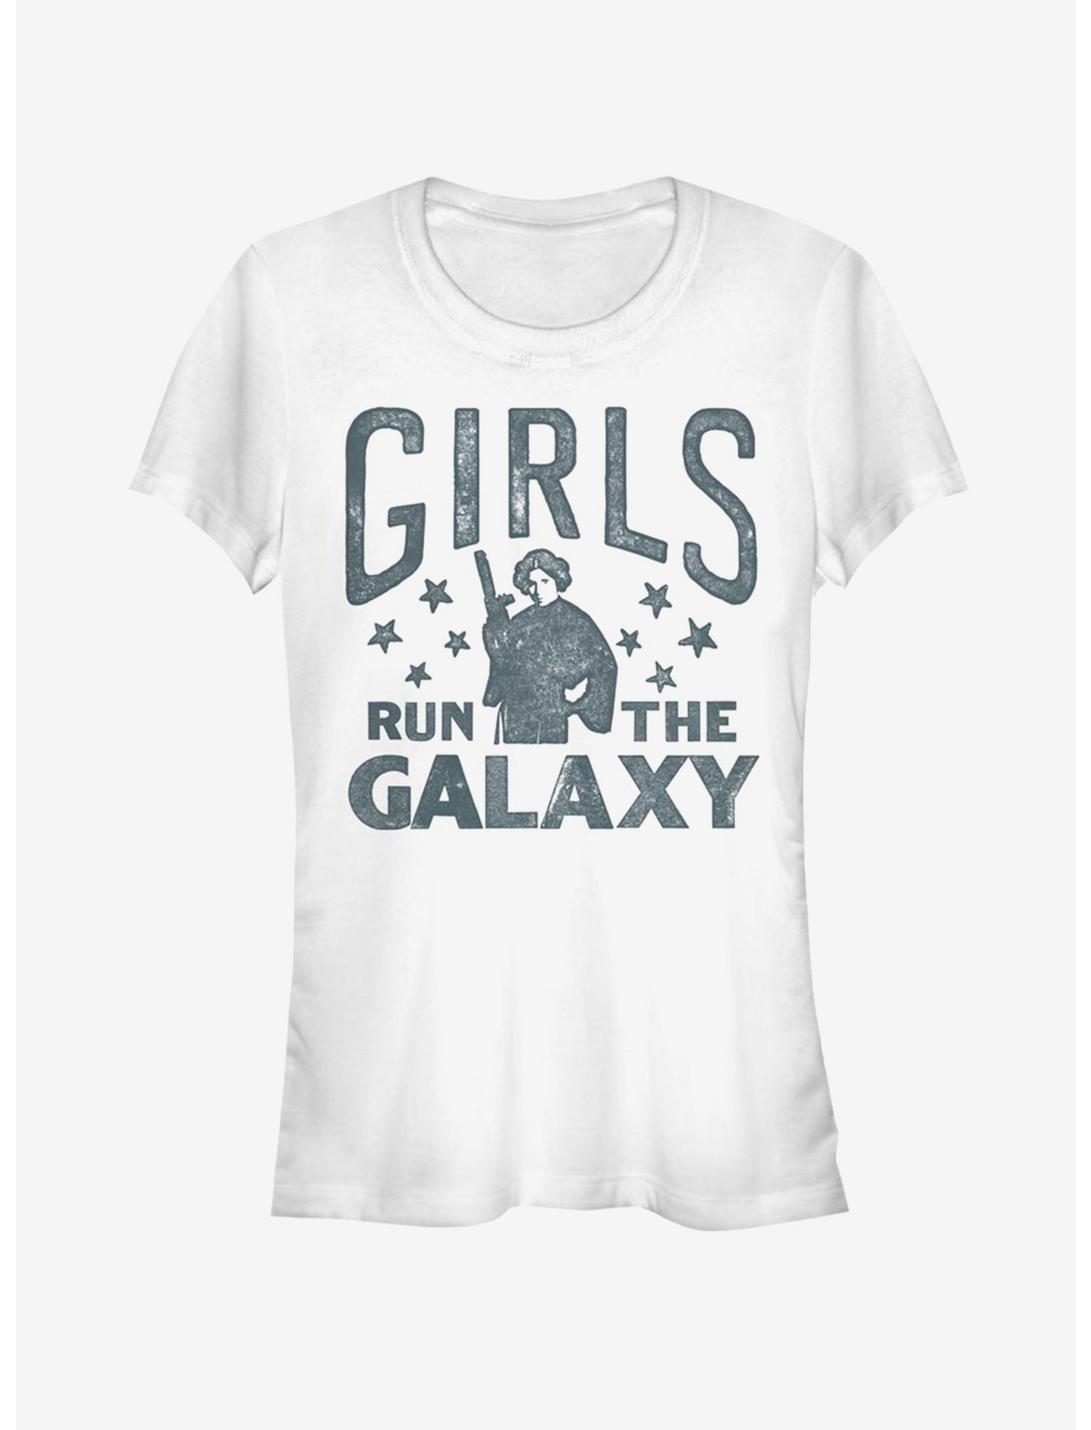 Star Wars Girls Run The Galaxy Girls T-Shirt, WHITE, hi-res